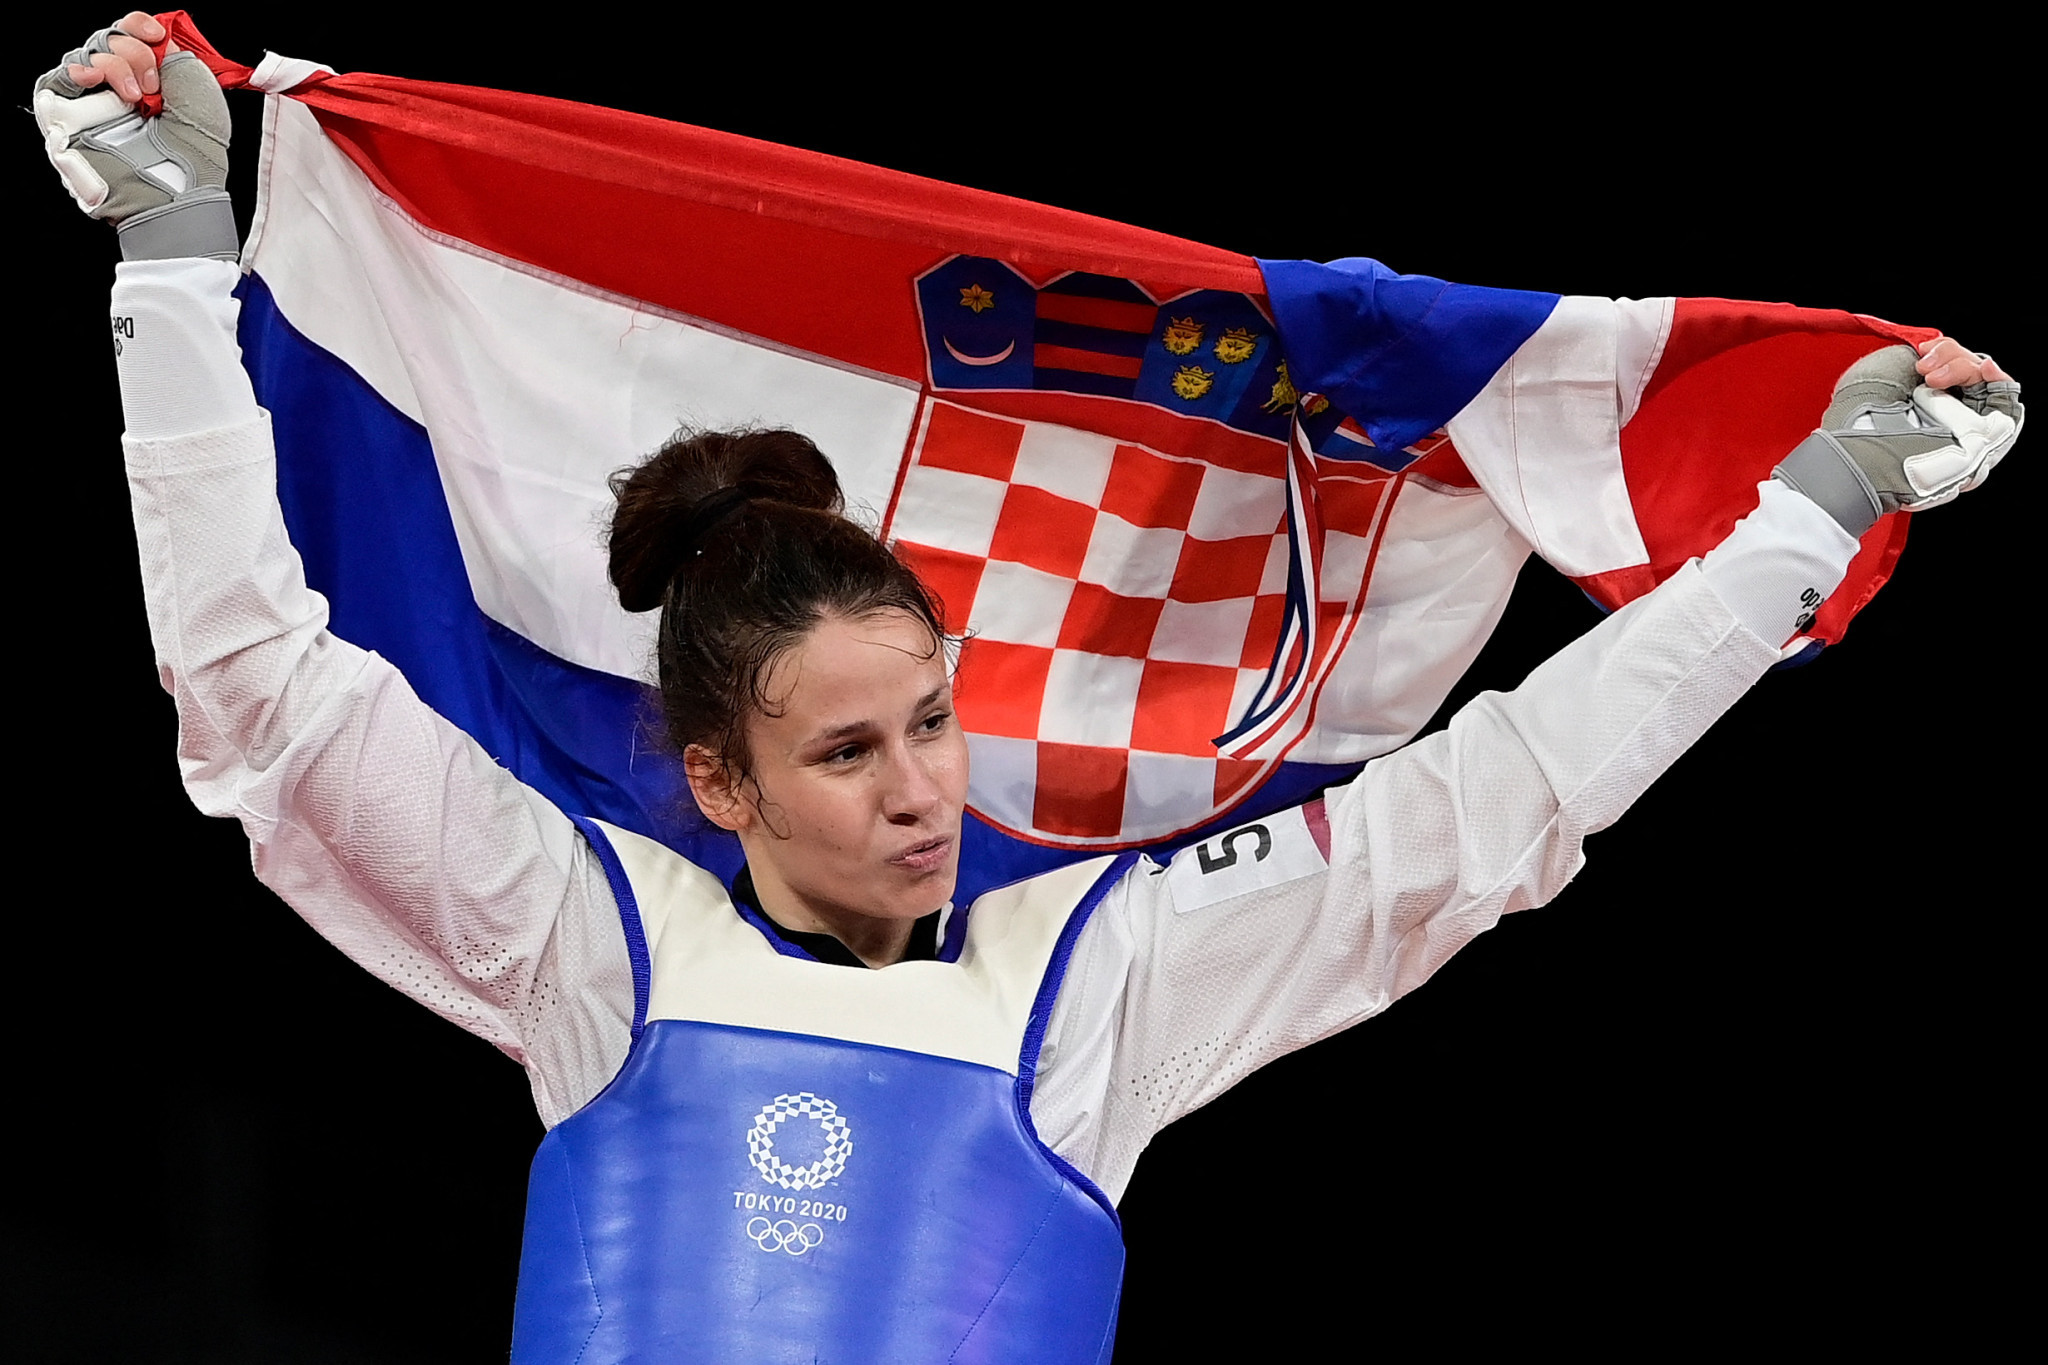 Tokyo 2020 champion Matea Jelić of Croatia is also set to appear at Kraków-Małopolska 2023 ©Getty Images